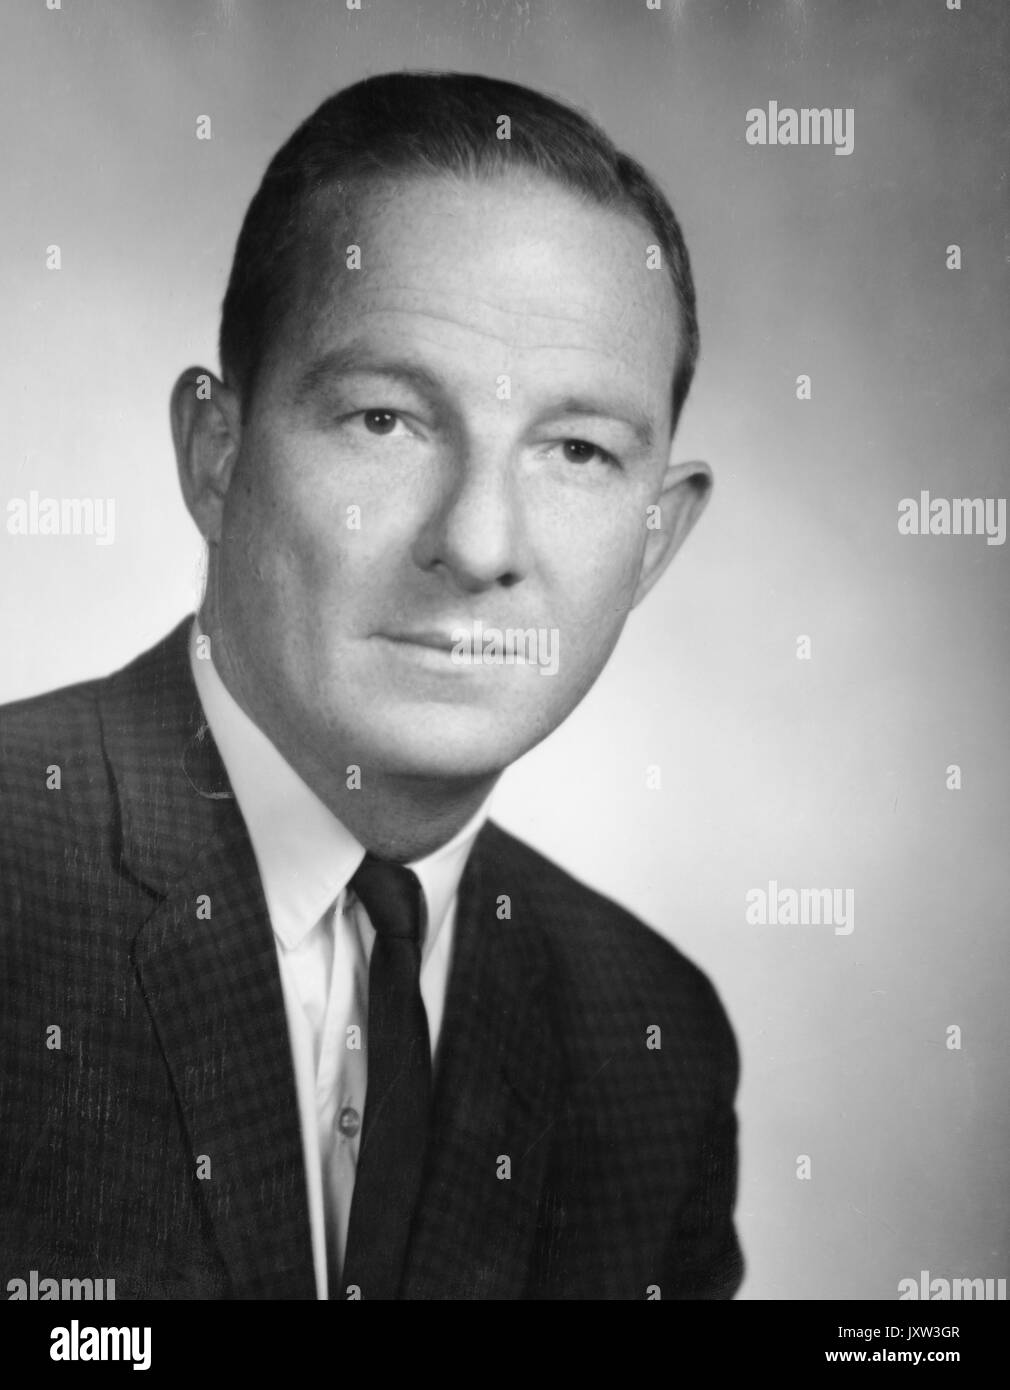 Stuart Leroy Brown, jr portrait Foto, Brust, Full Face, c 40 Jahre, 1960. Stockfoto